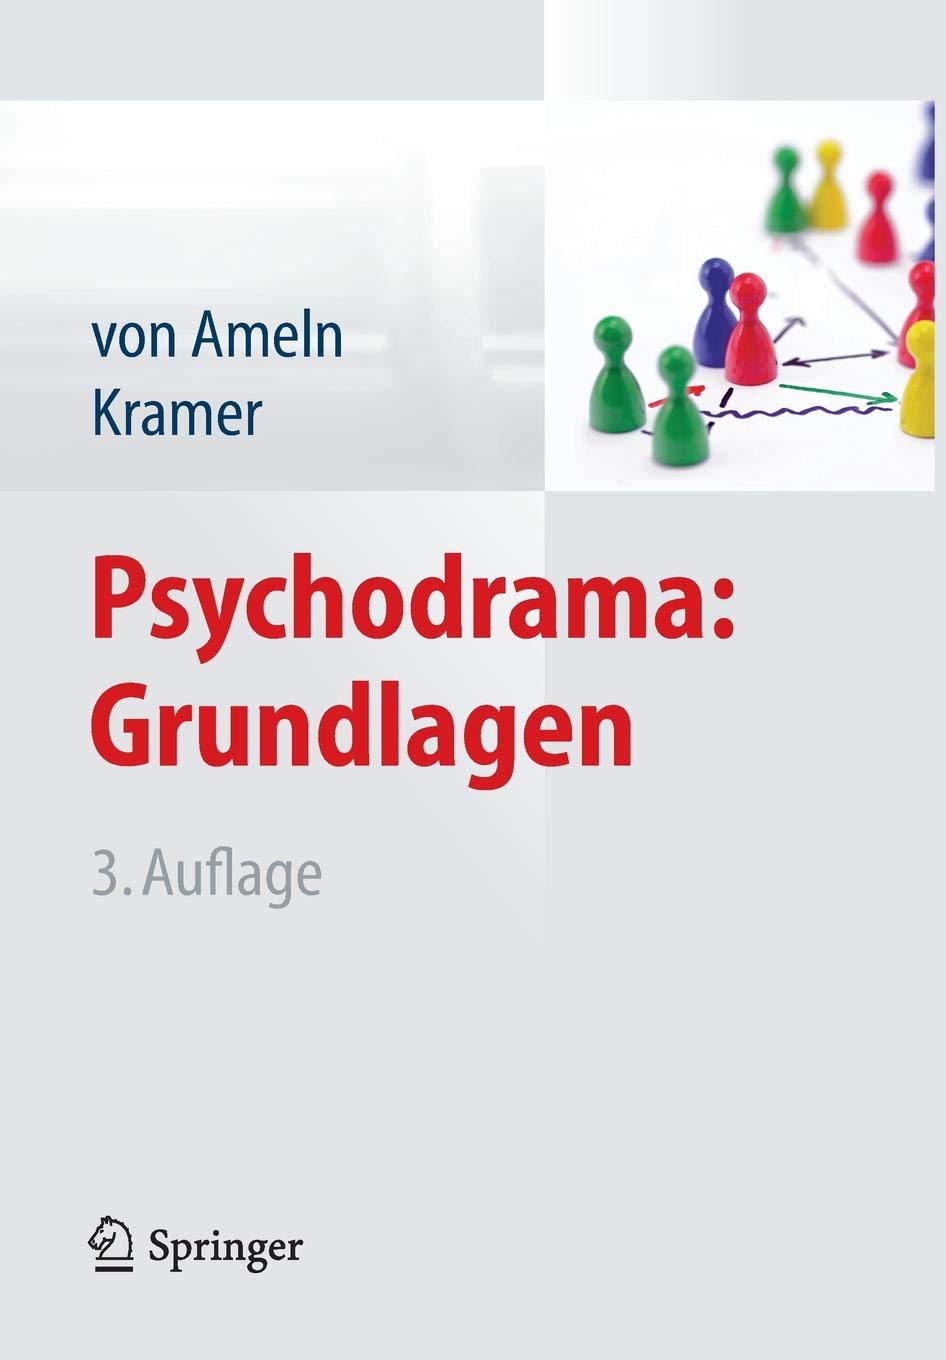 Buch: Psychodrama Grundlagen nach Moreno (Amazon)